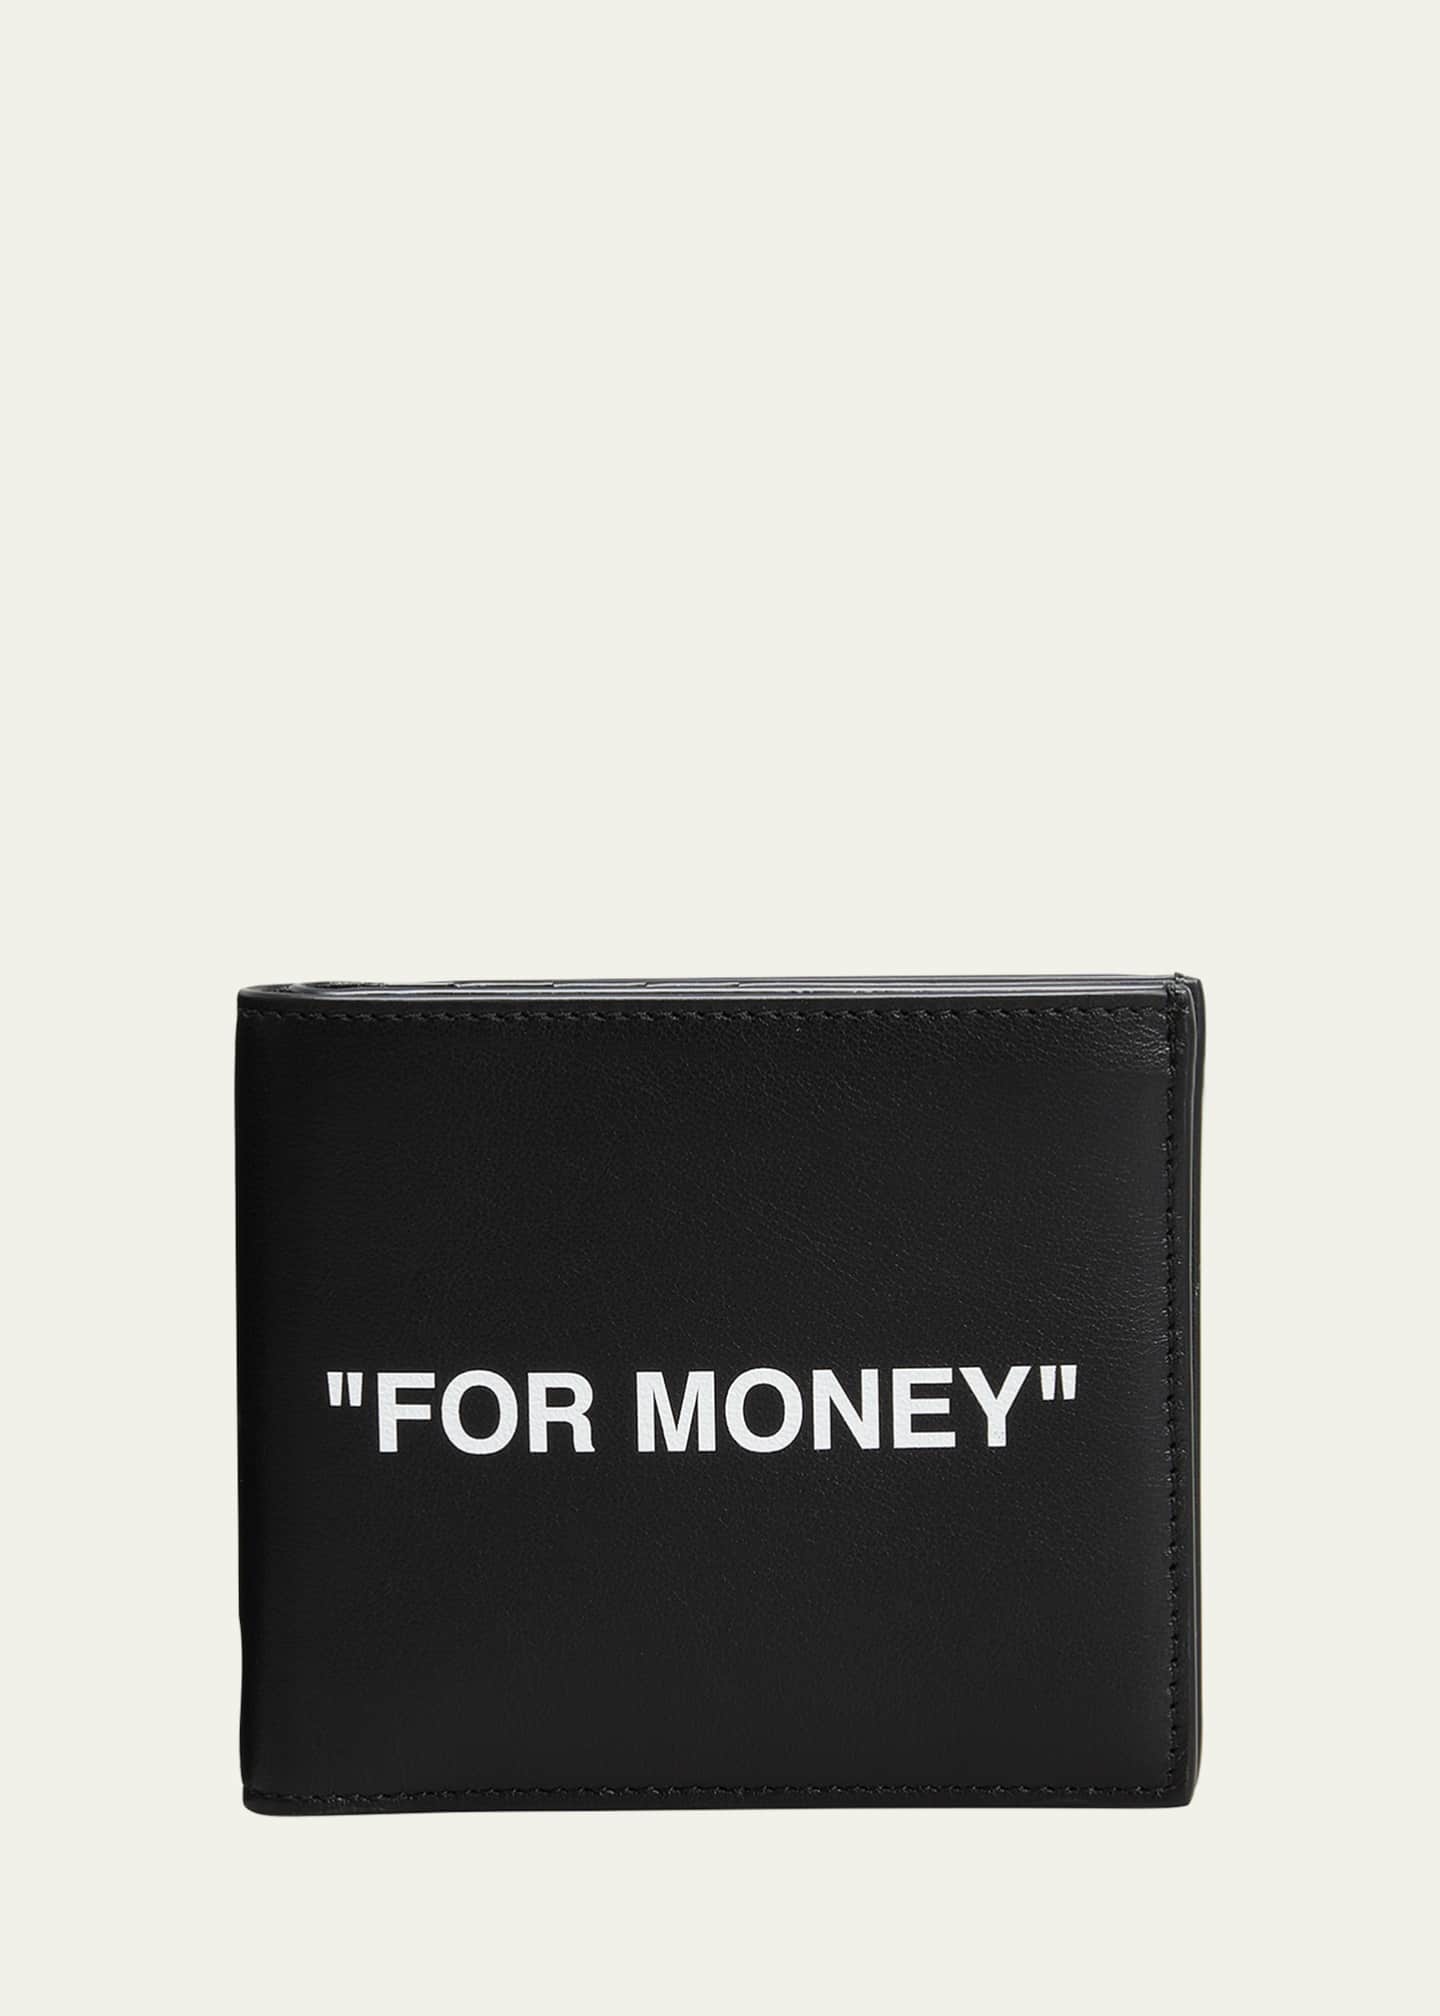 Off-White Money" Leather Bifold Wallet Goodman